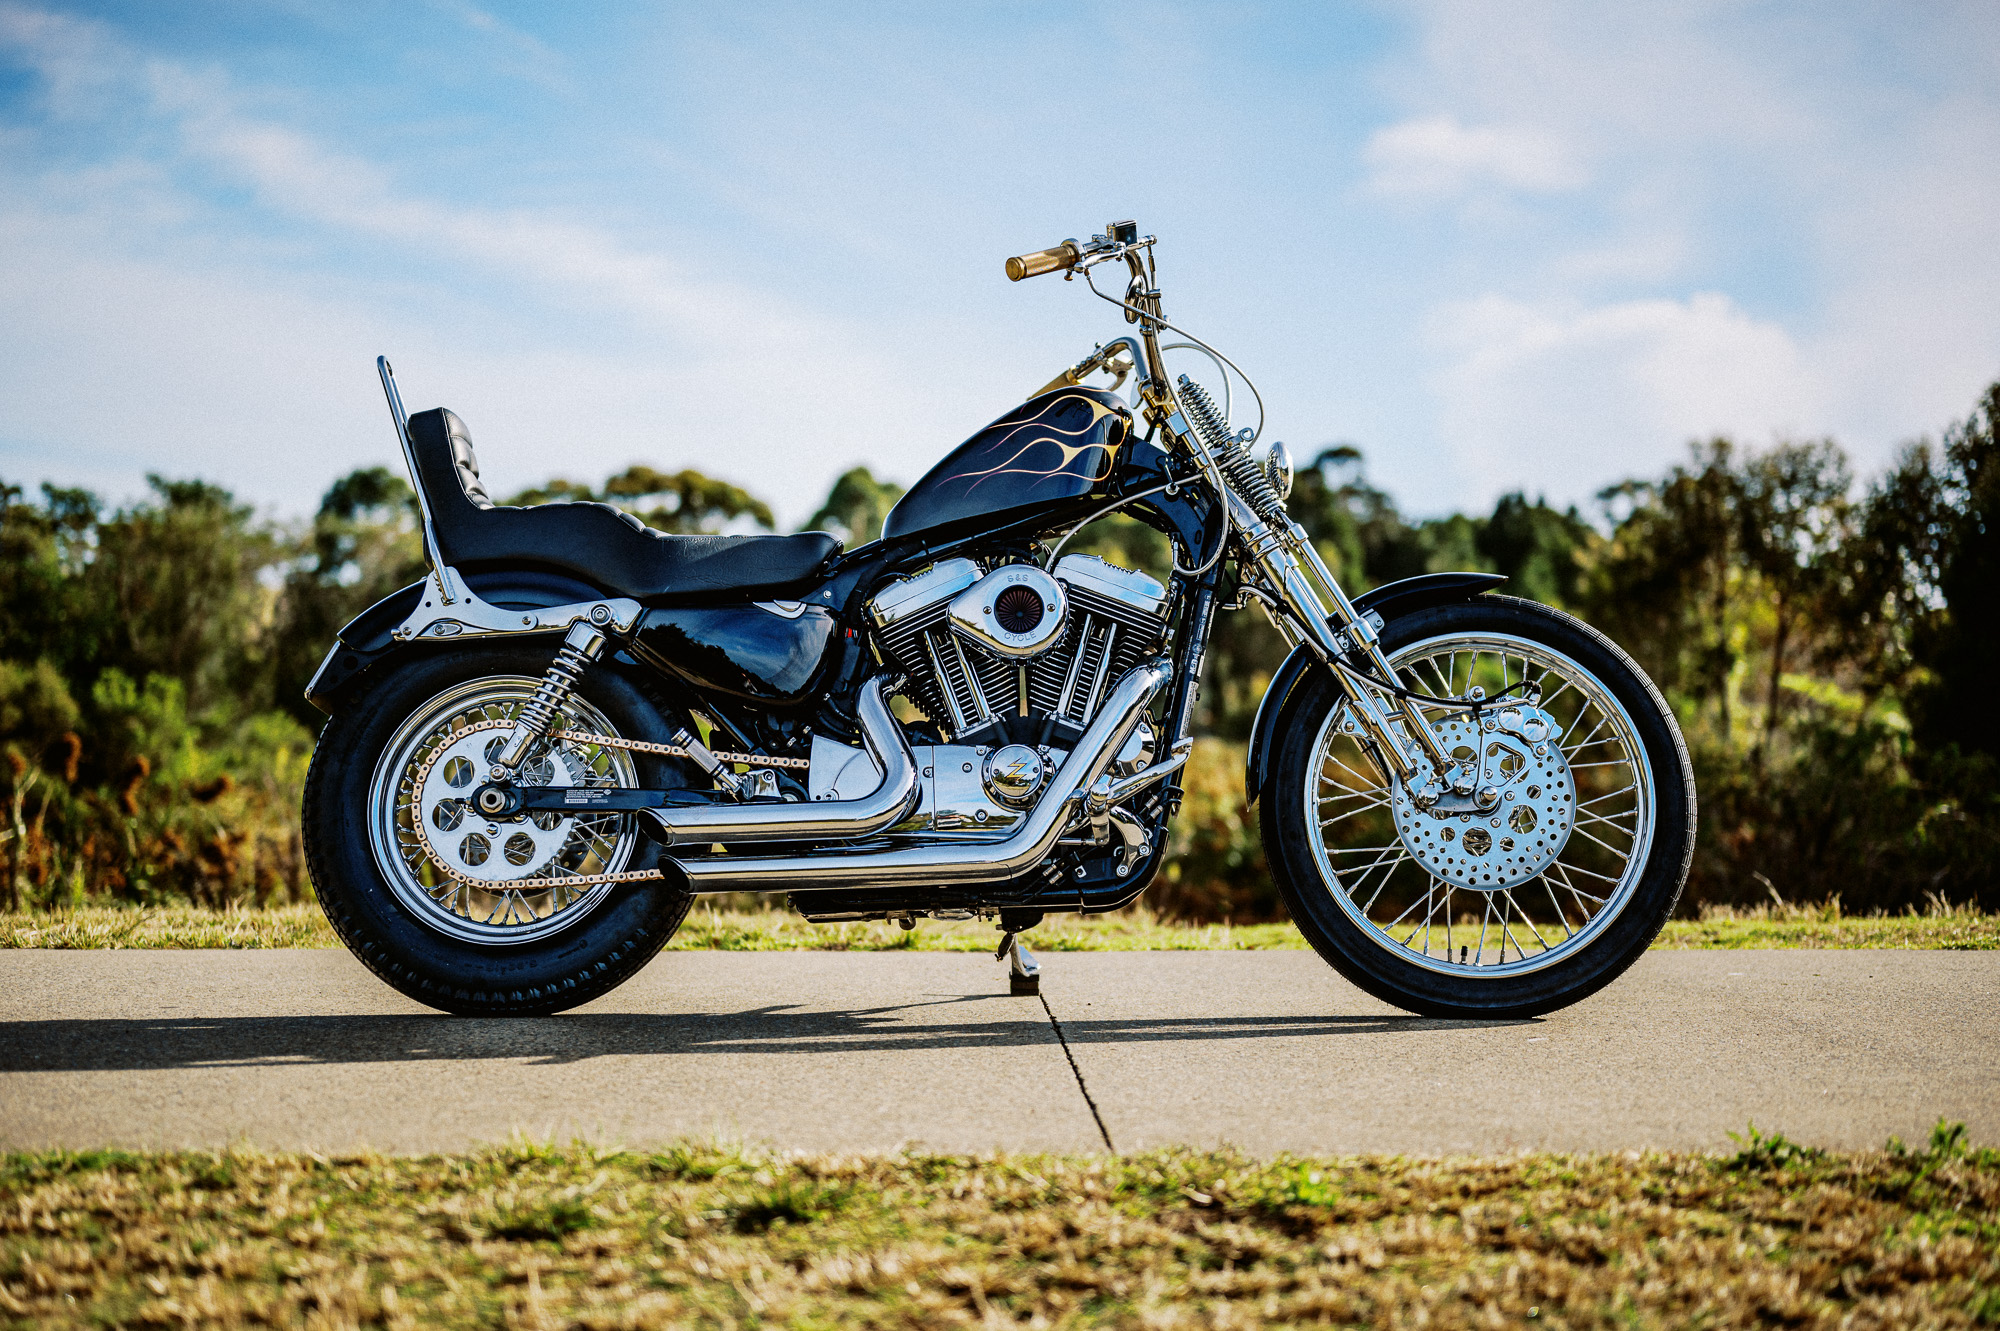 Vue latérale du chopper Harley Sportster 2015 de Zen Motorcycle